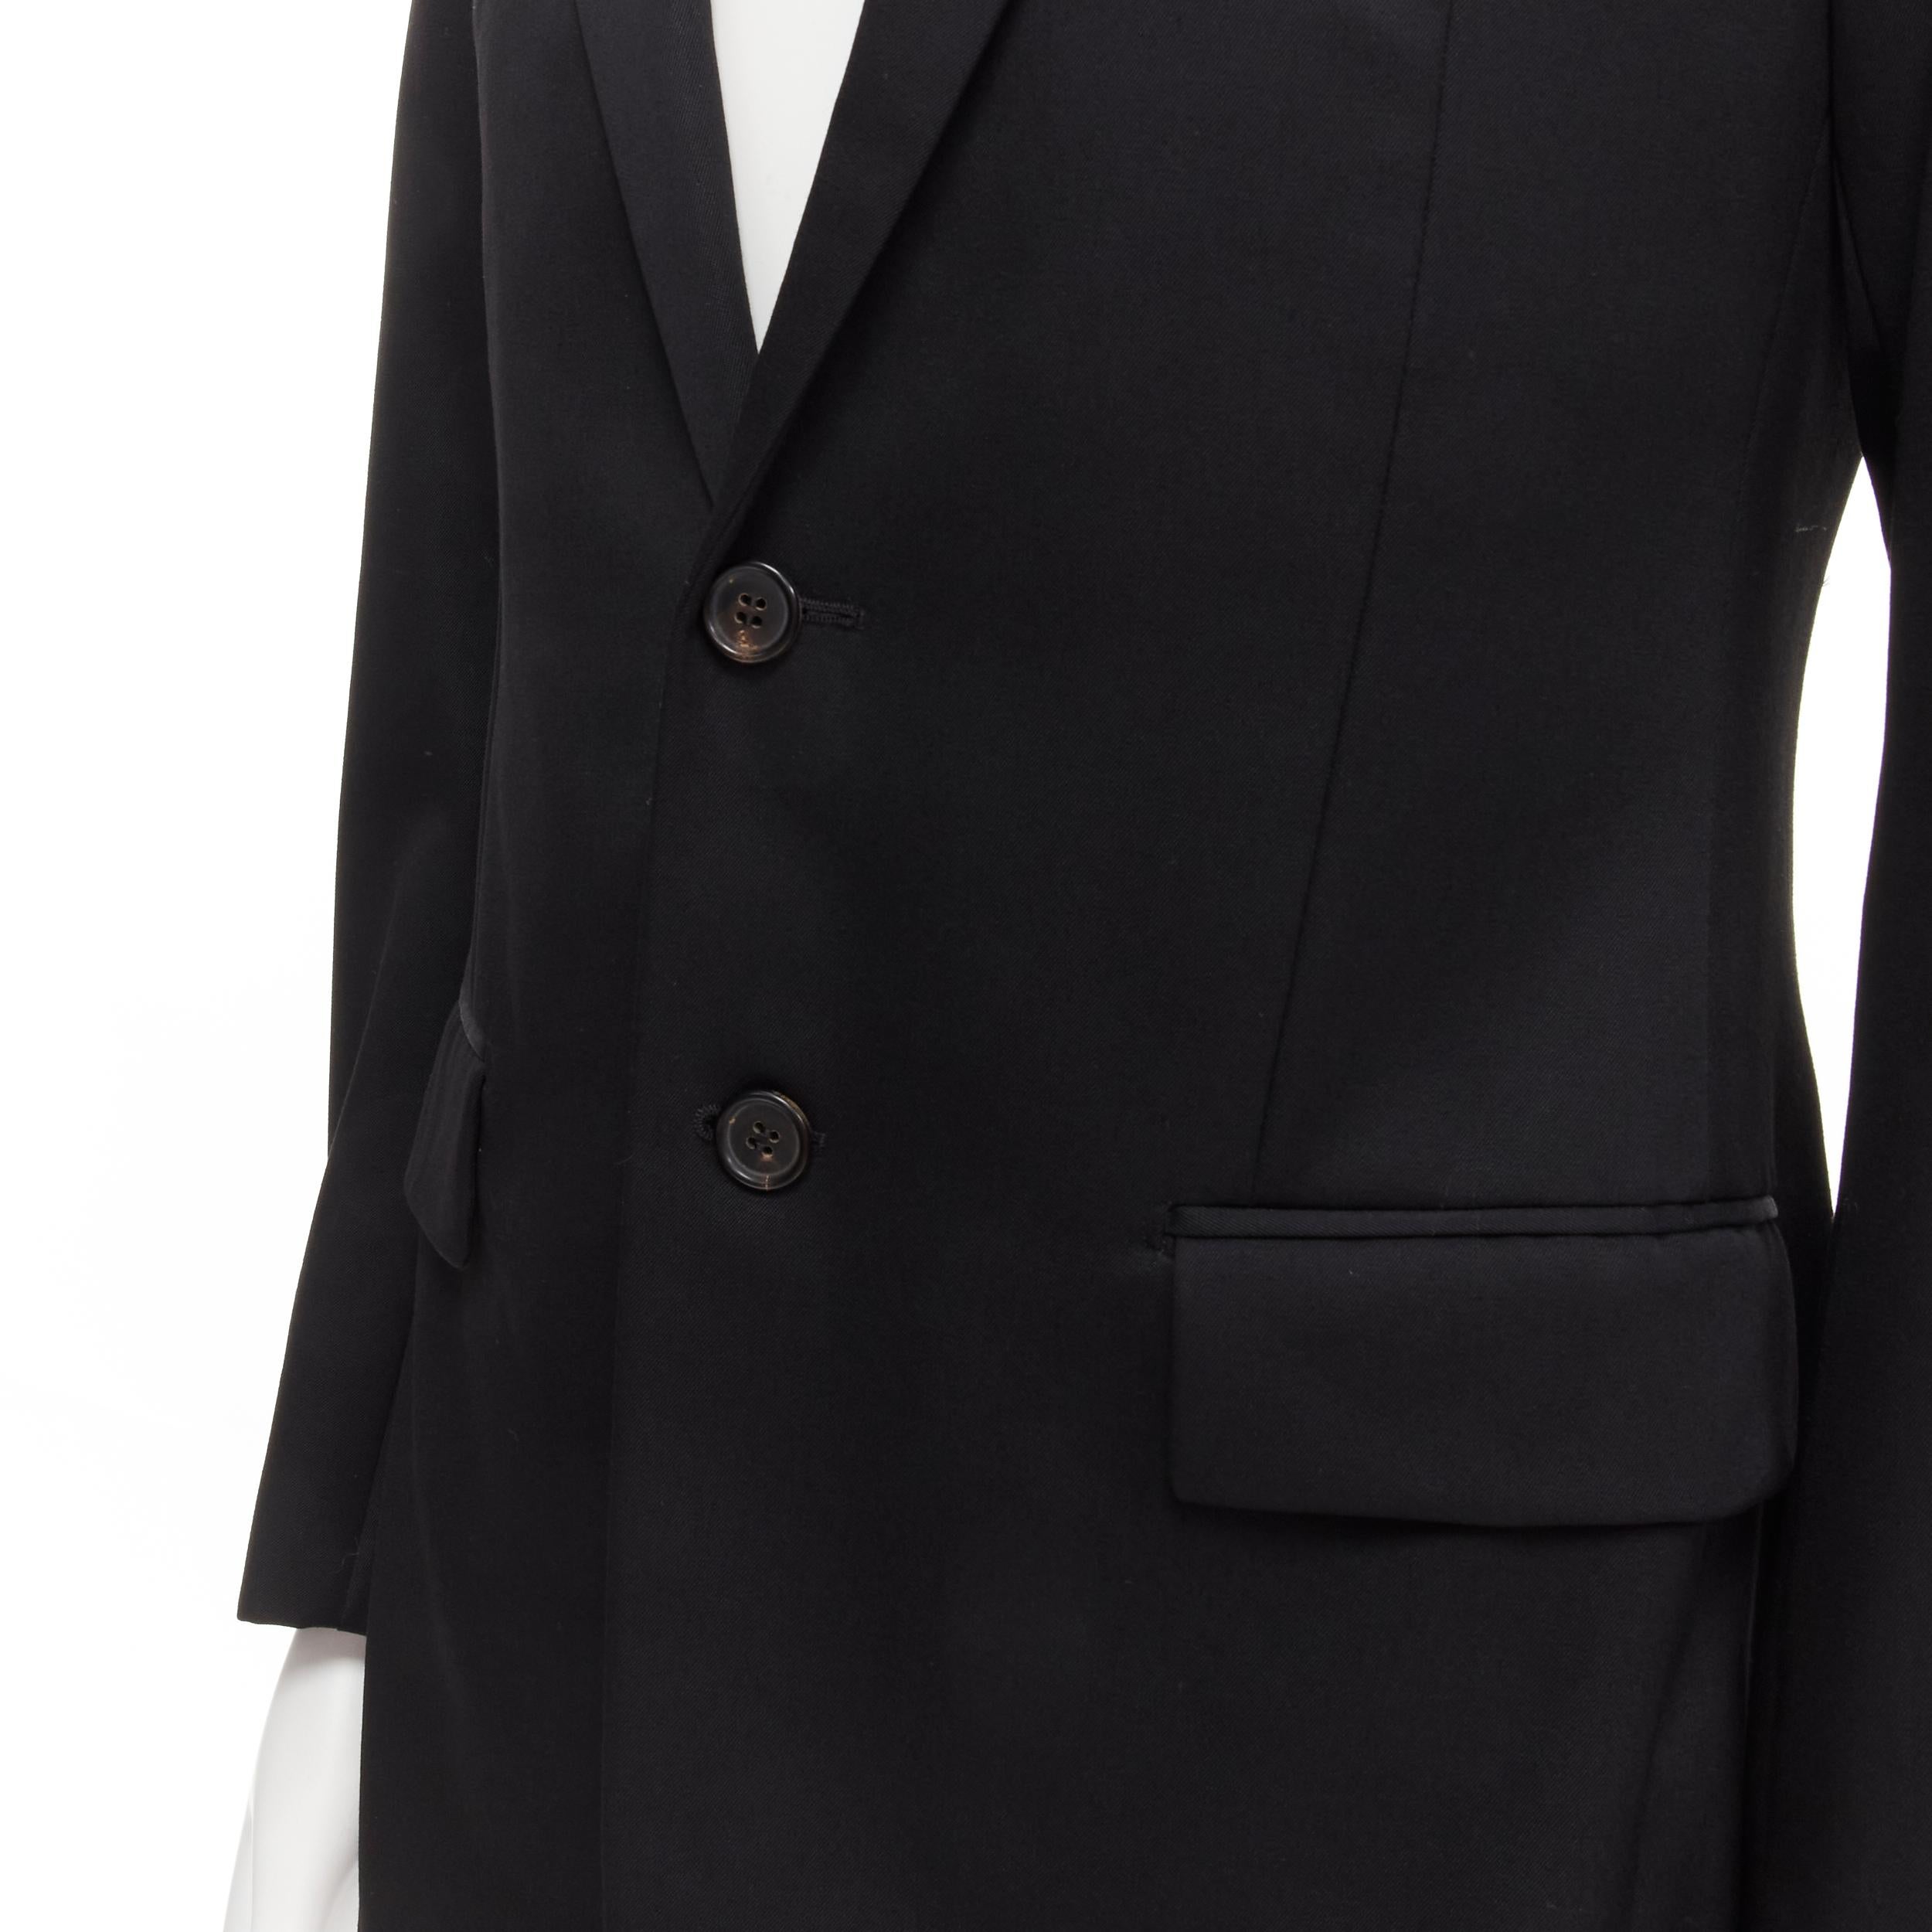 DIOR HOMME Hedi Slimane leather collar classic 2-button blazer jacket FR46 S For Sale 4